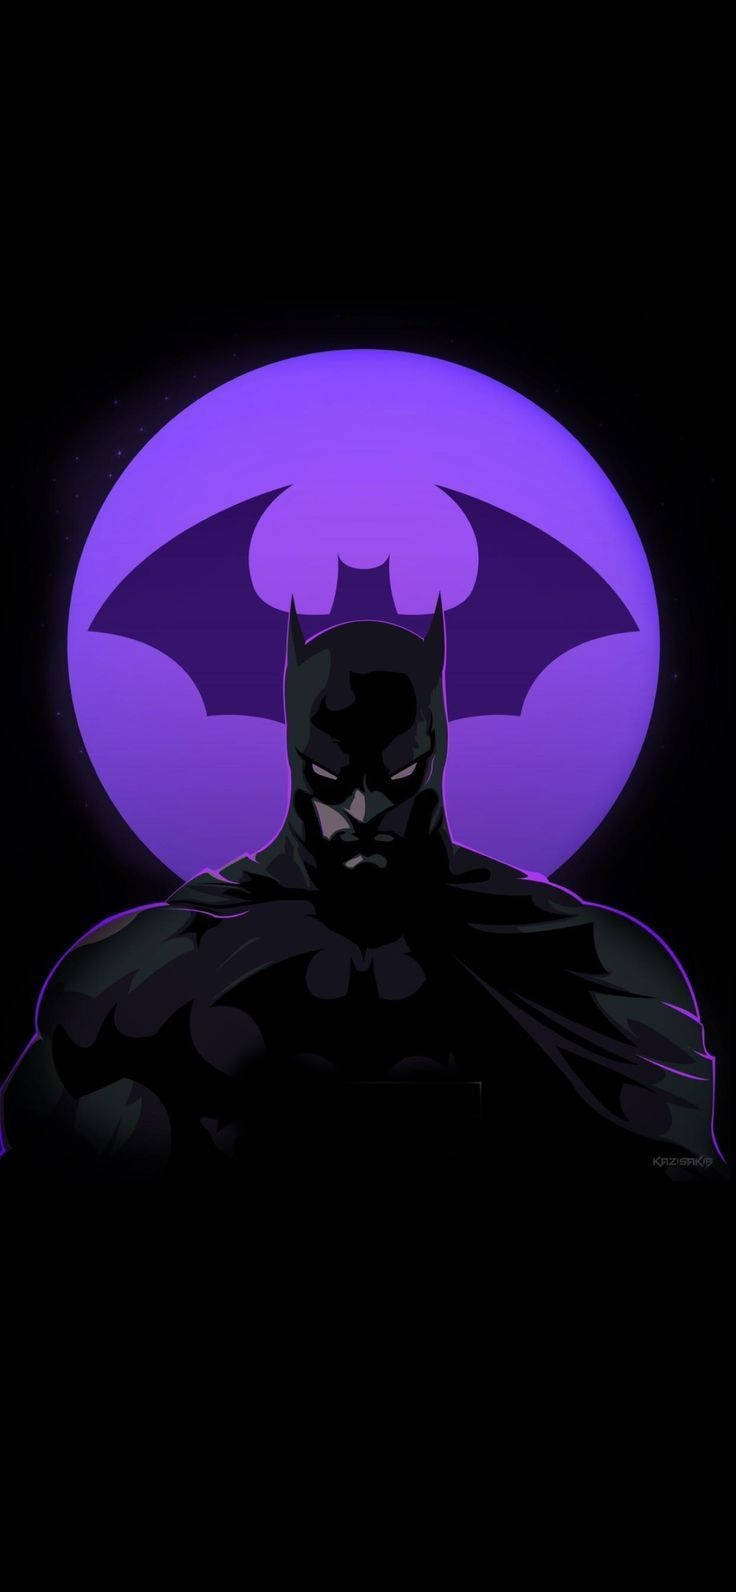 Batman Fanfiction Illustration iPhone X Wallpaper